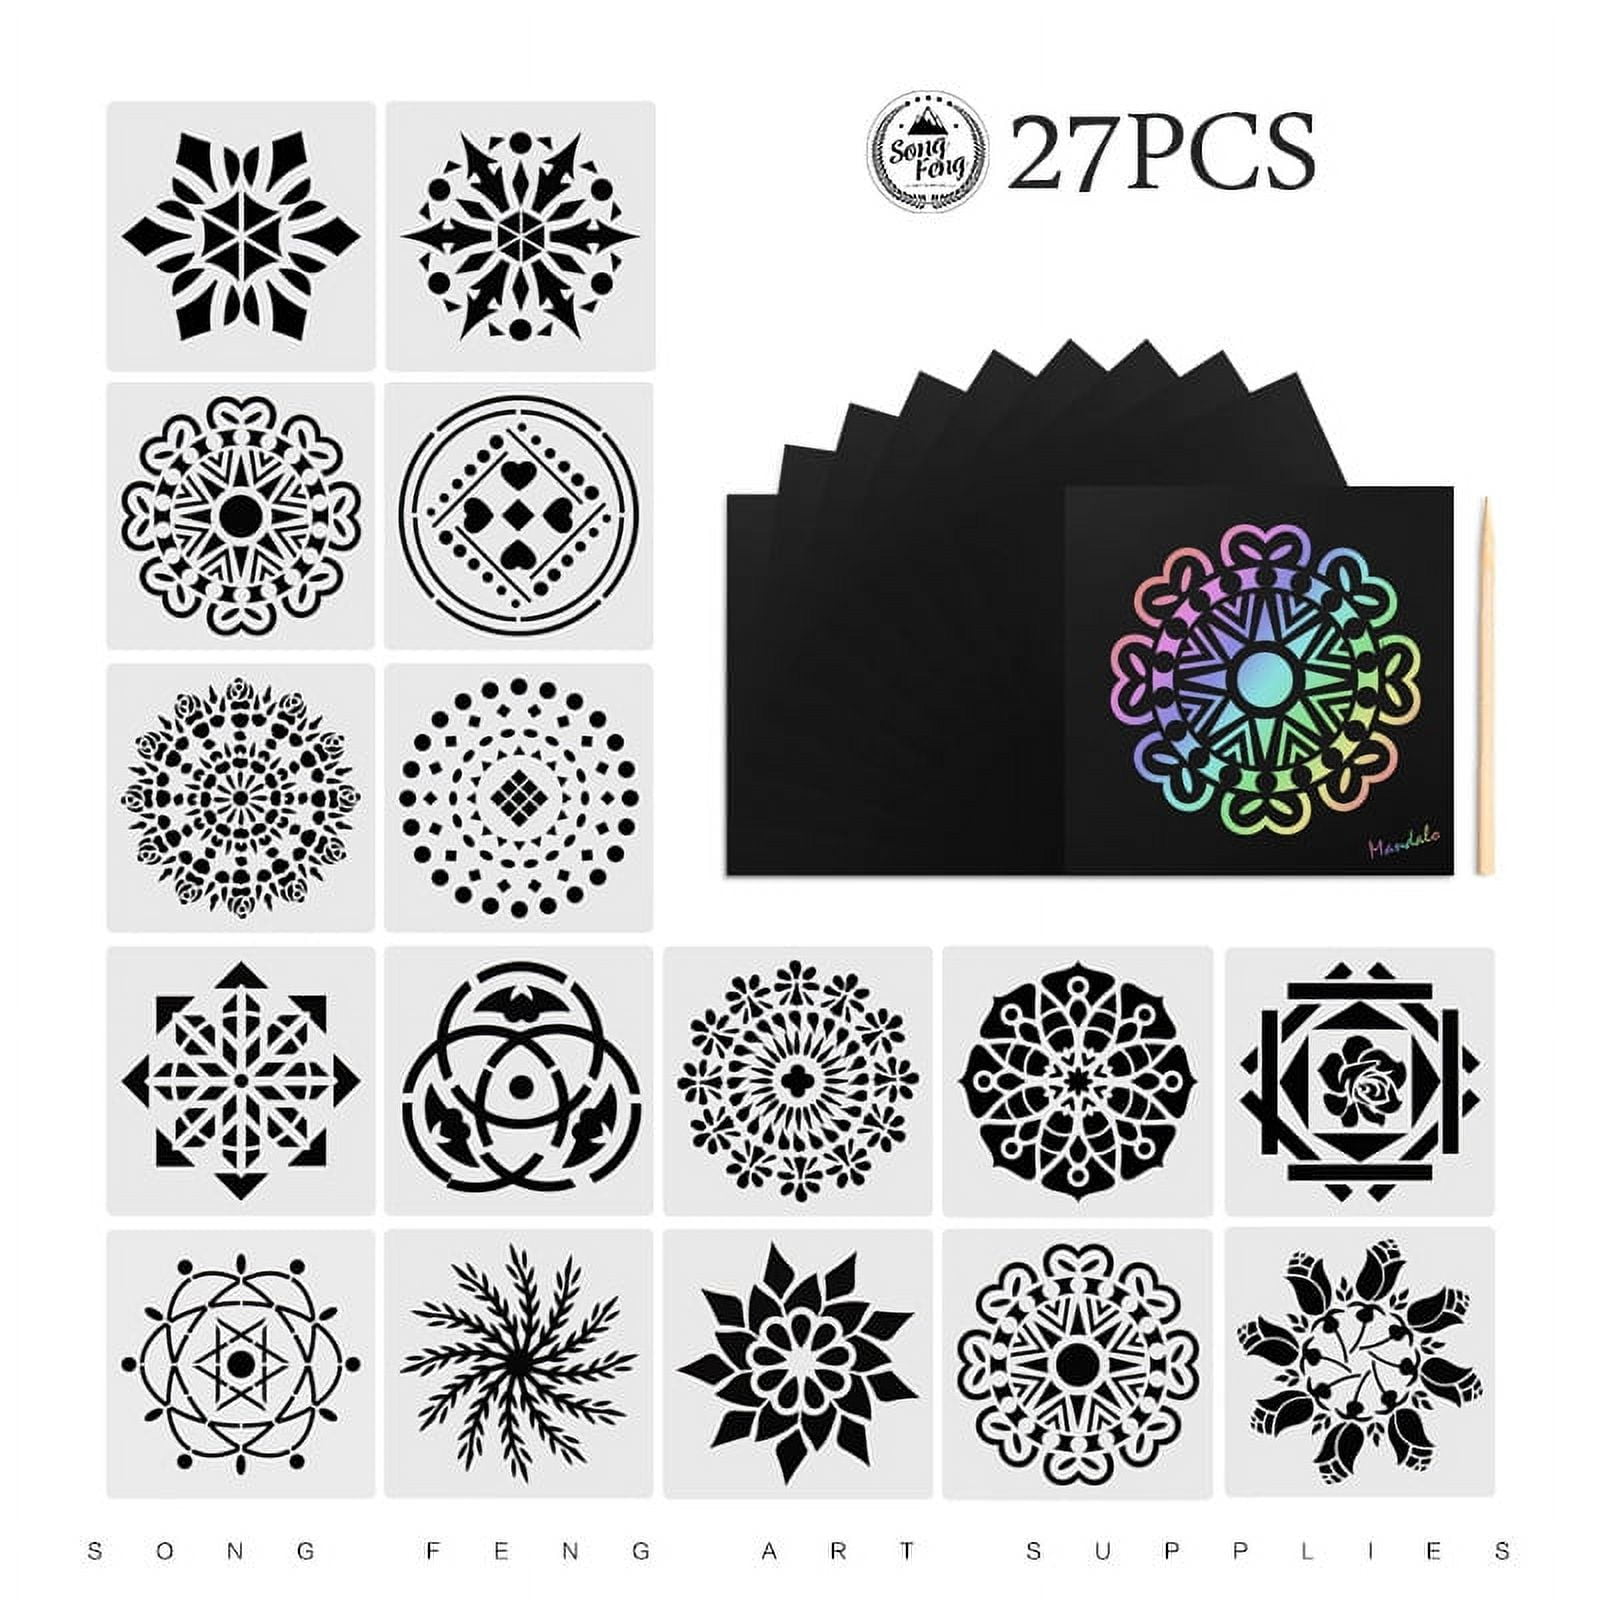 Hakkin 34PCS Mandala Dotting Tools Painting Kit,Rock Dot Paint Stencils  Tool Set Art Craft Supplies Gift Kit 